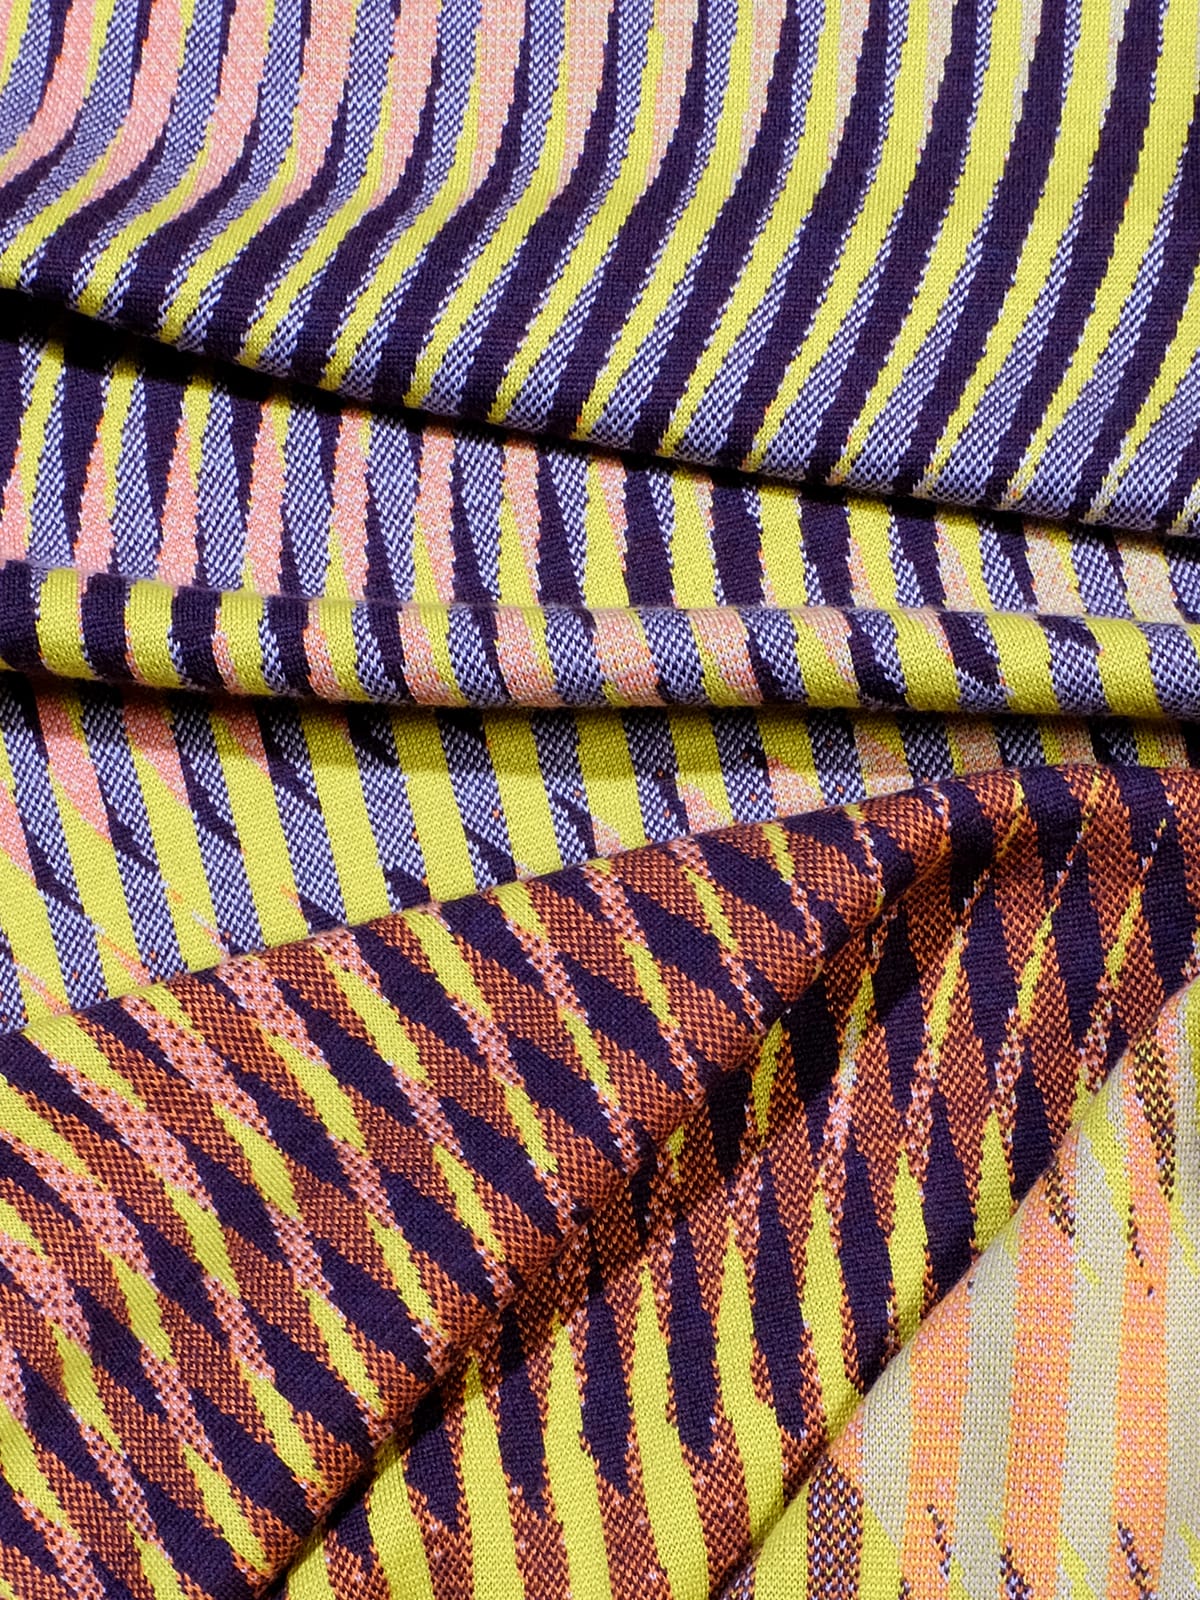 Knitted Blanket Musselshell - Merino Wool details